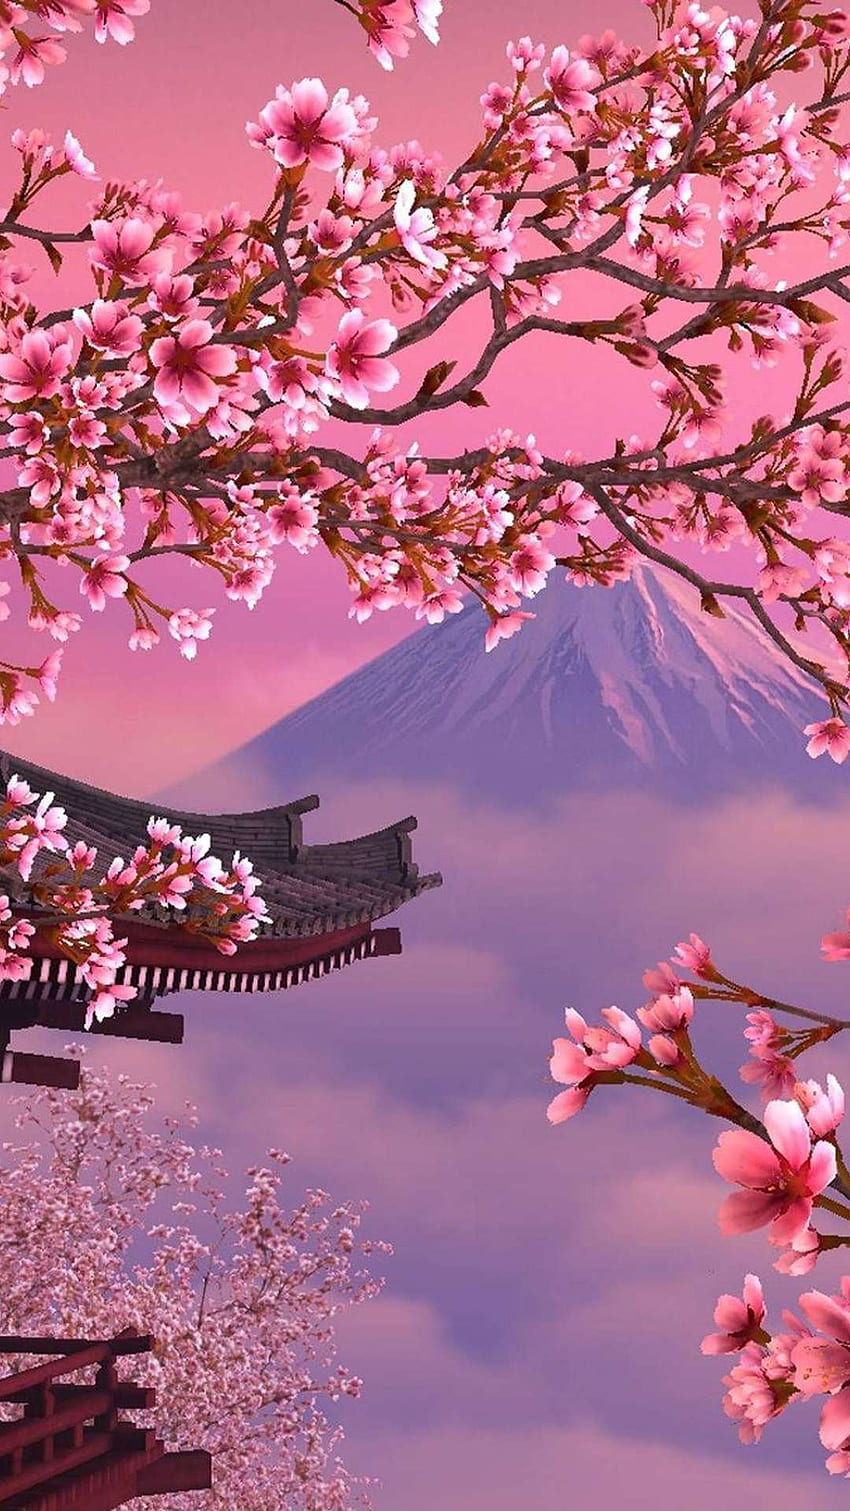 Cherry Blossom Wallpapers: Free HD Download [500+ HQ] | Unsplash